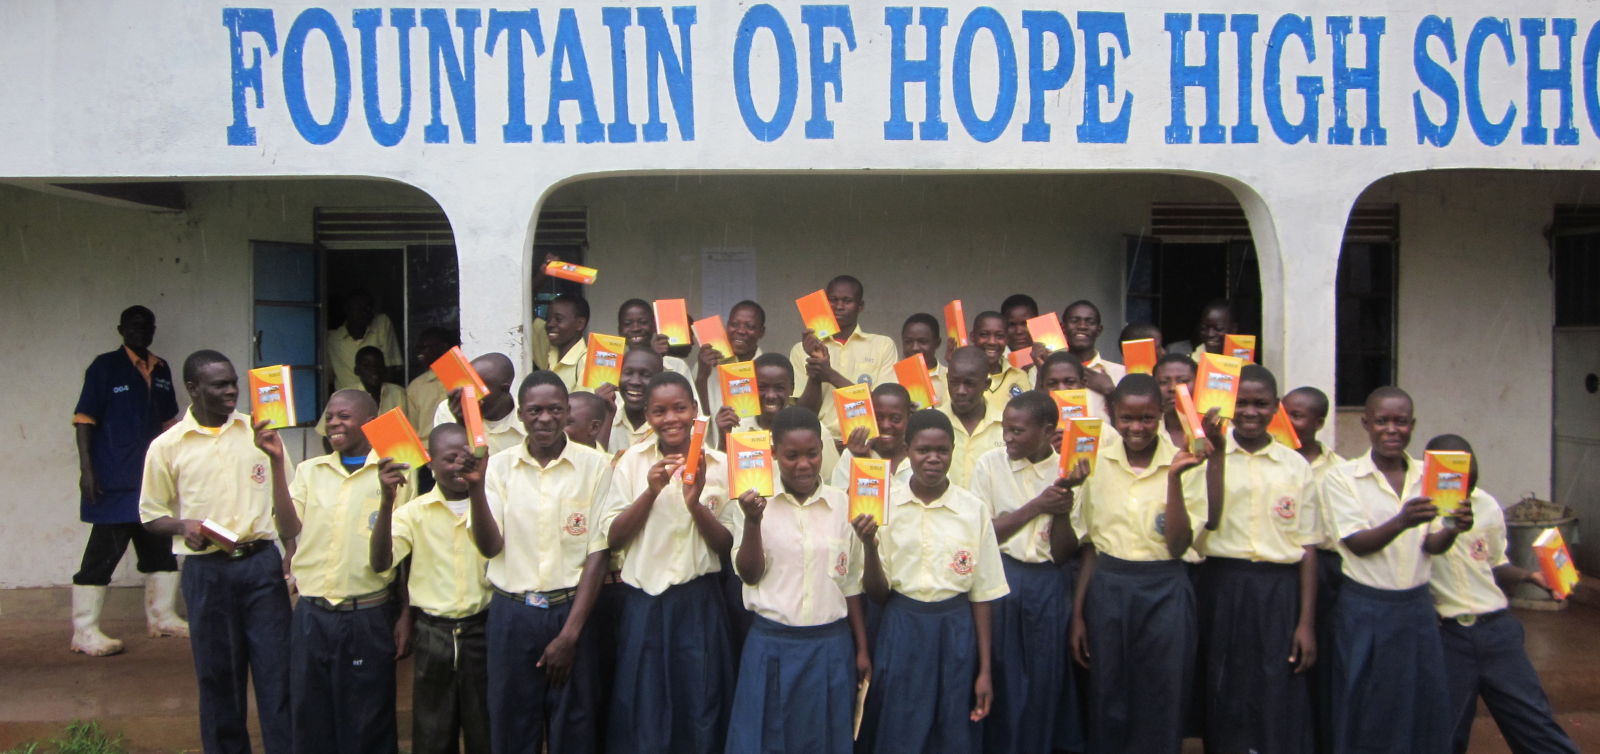 GGI Fountain of Hope students in Uganda